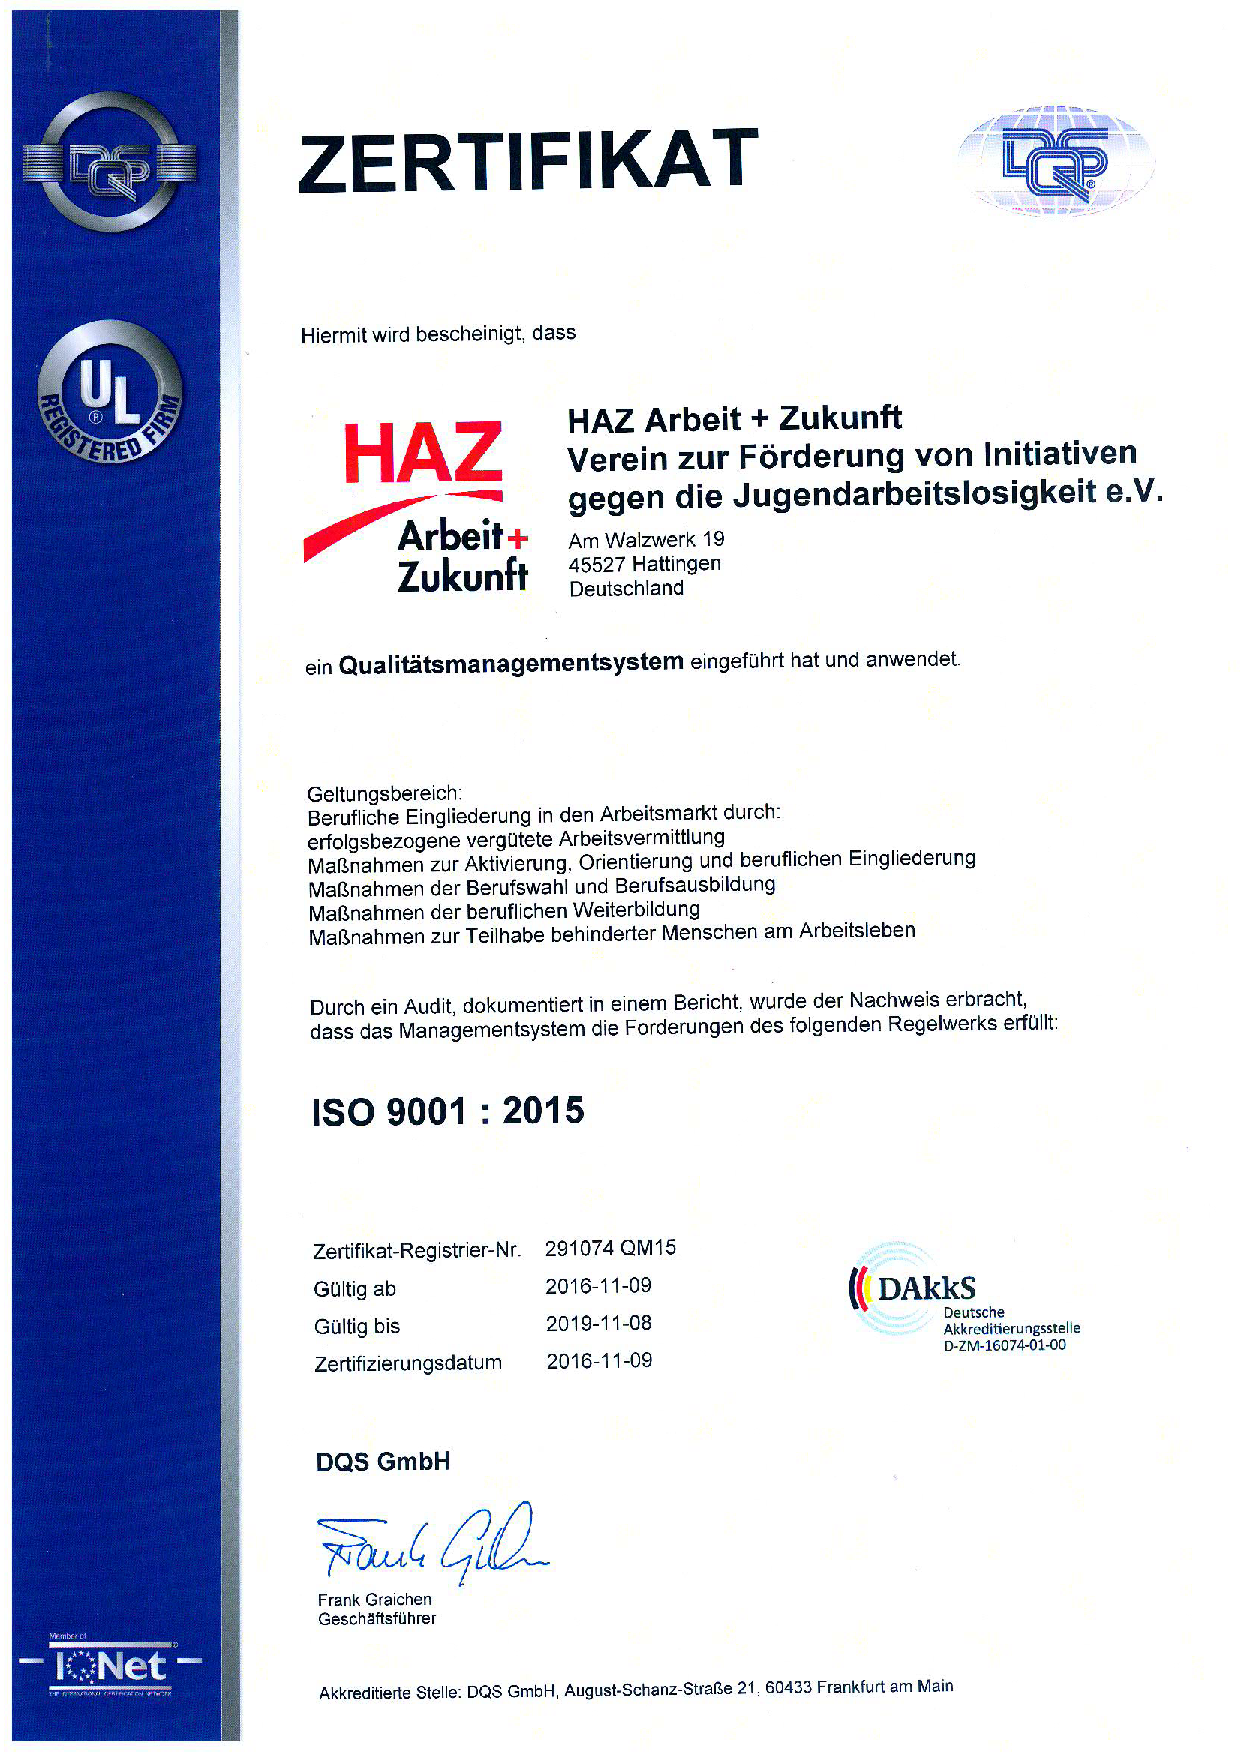 Qualitätsmanagementsystem nach DIN-ISO 9001:2000